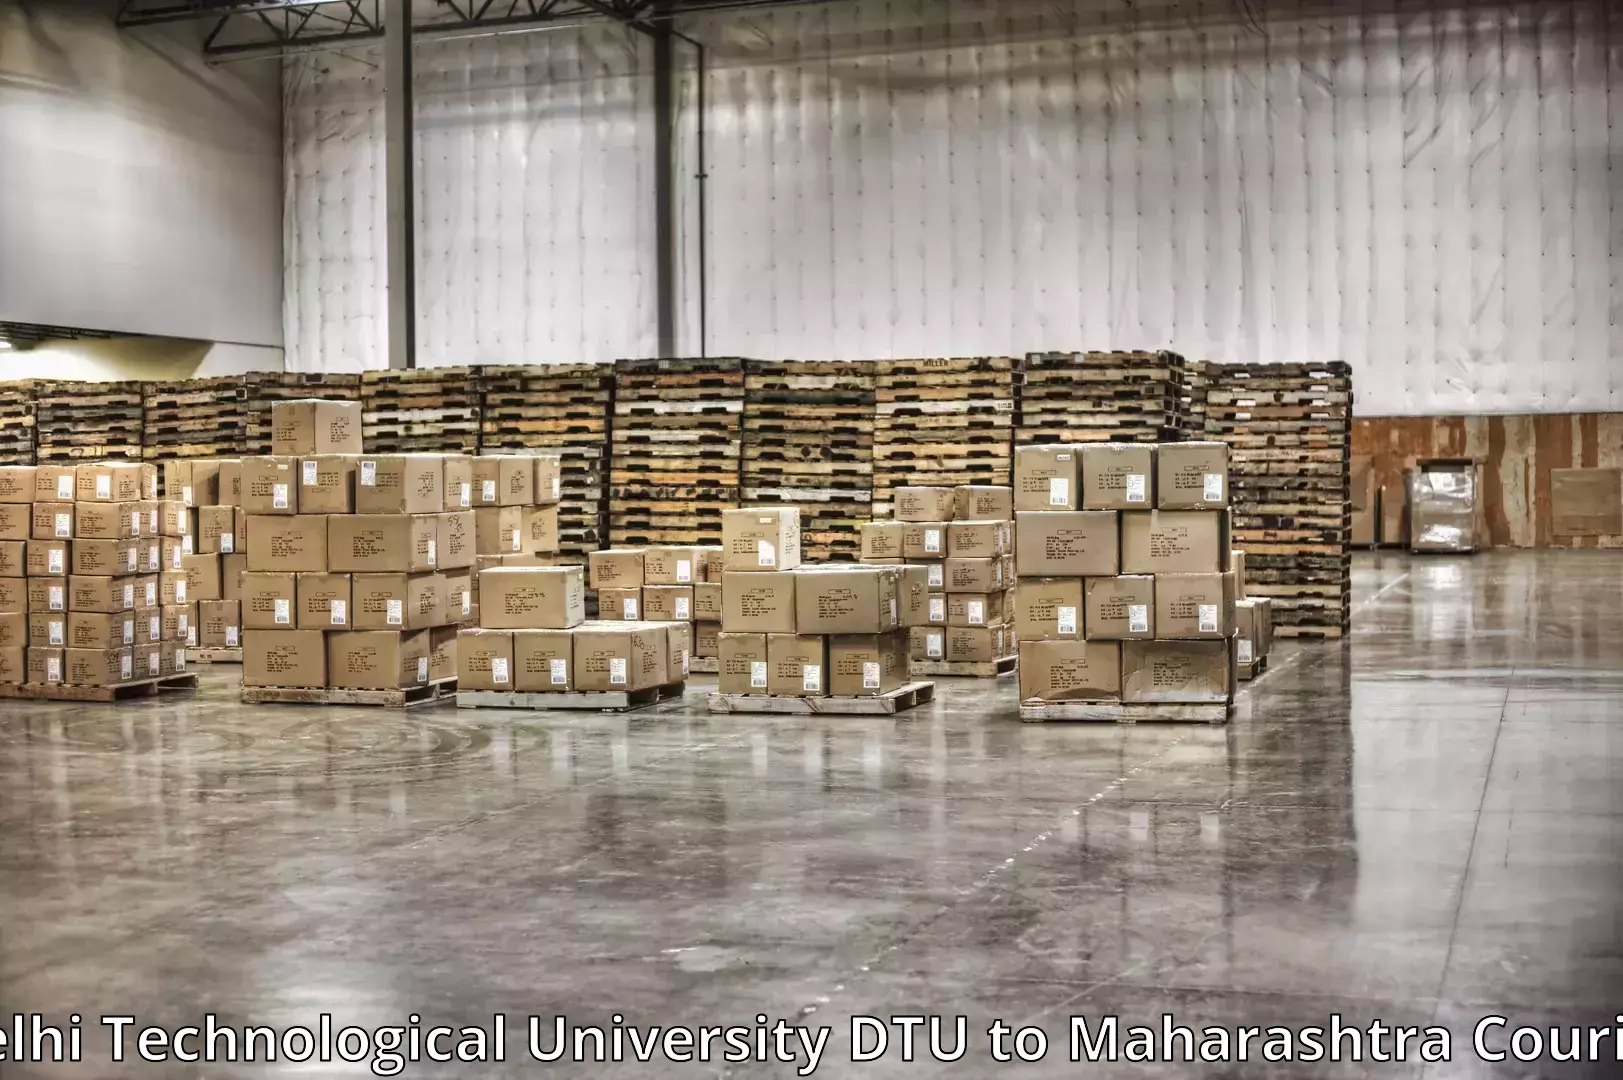 Furniture moving experts Delhi Technological University DTU to Pandharpur